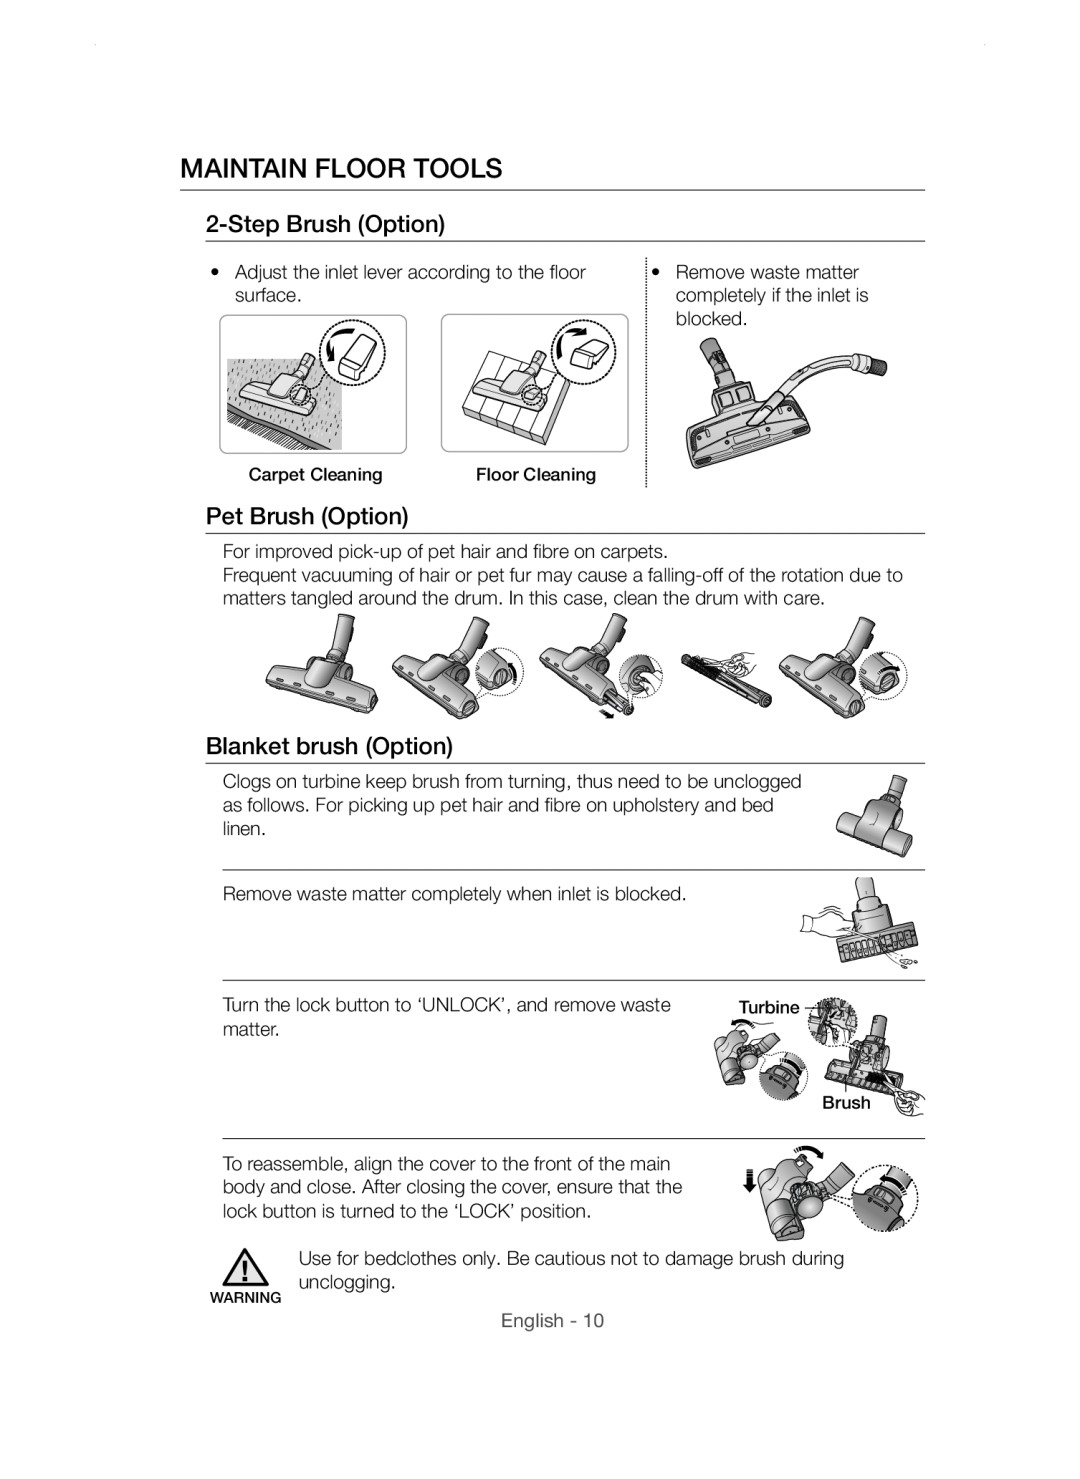 Samsung VC20AVNDCRD/TR manual Maintain Floor Tools, Step Brush Option, Pet Brush Option, Blanket brush Option, English 